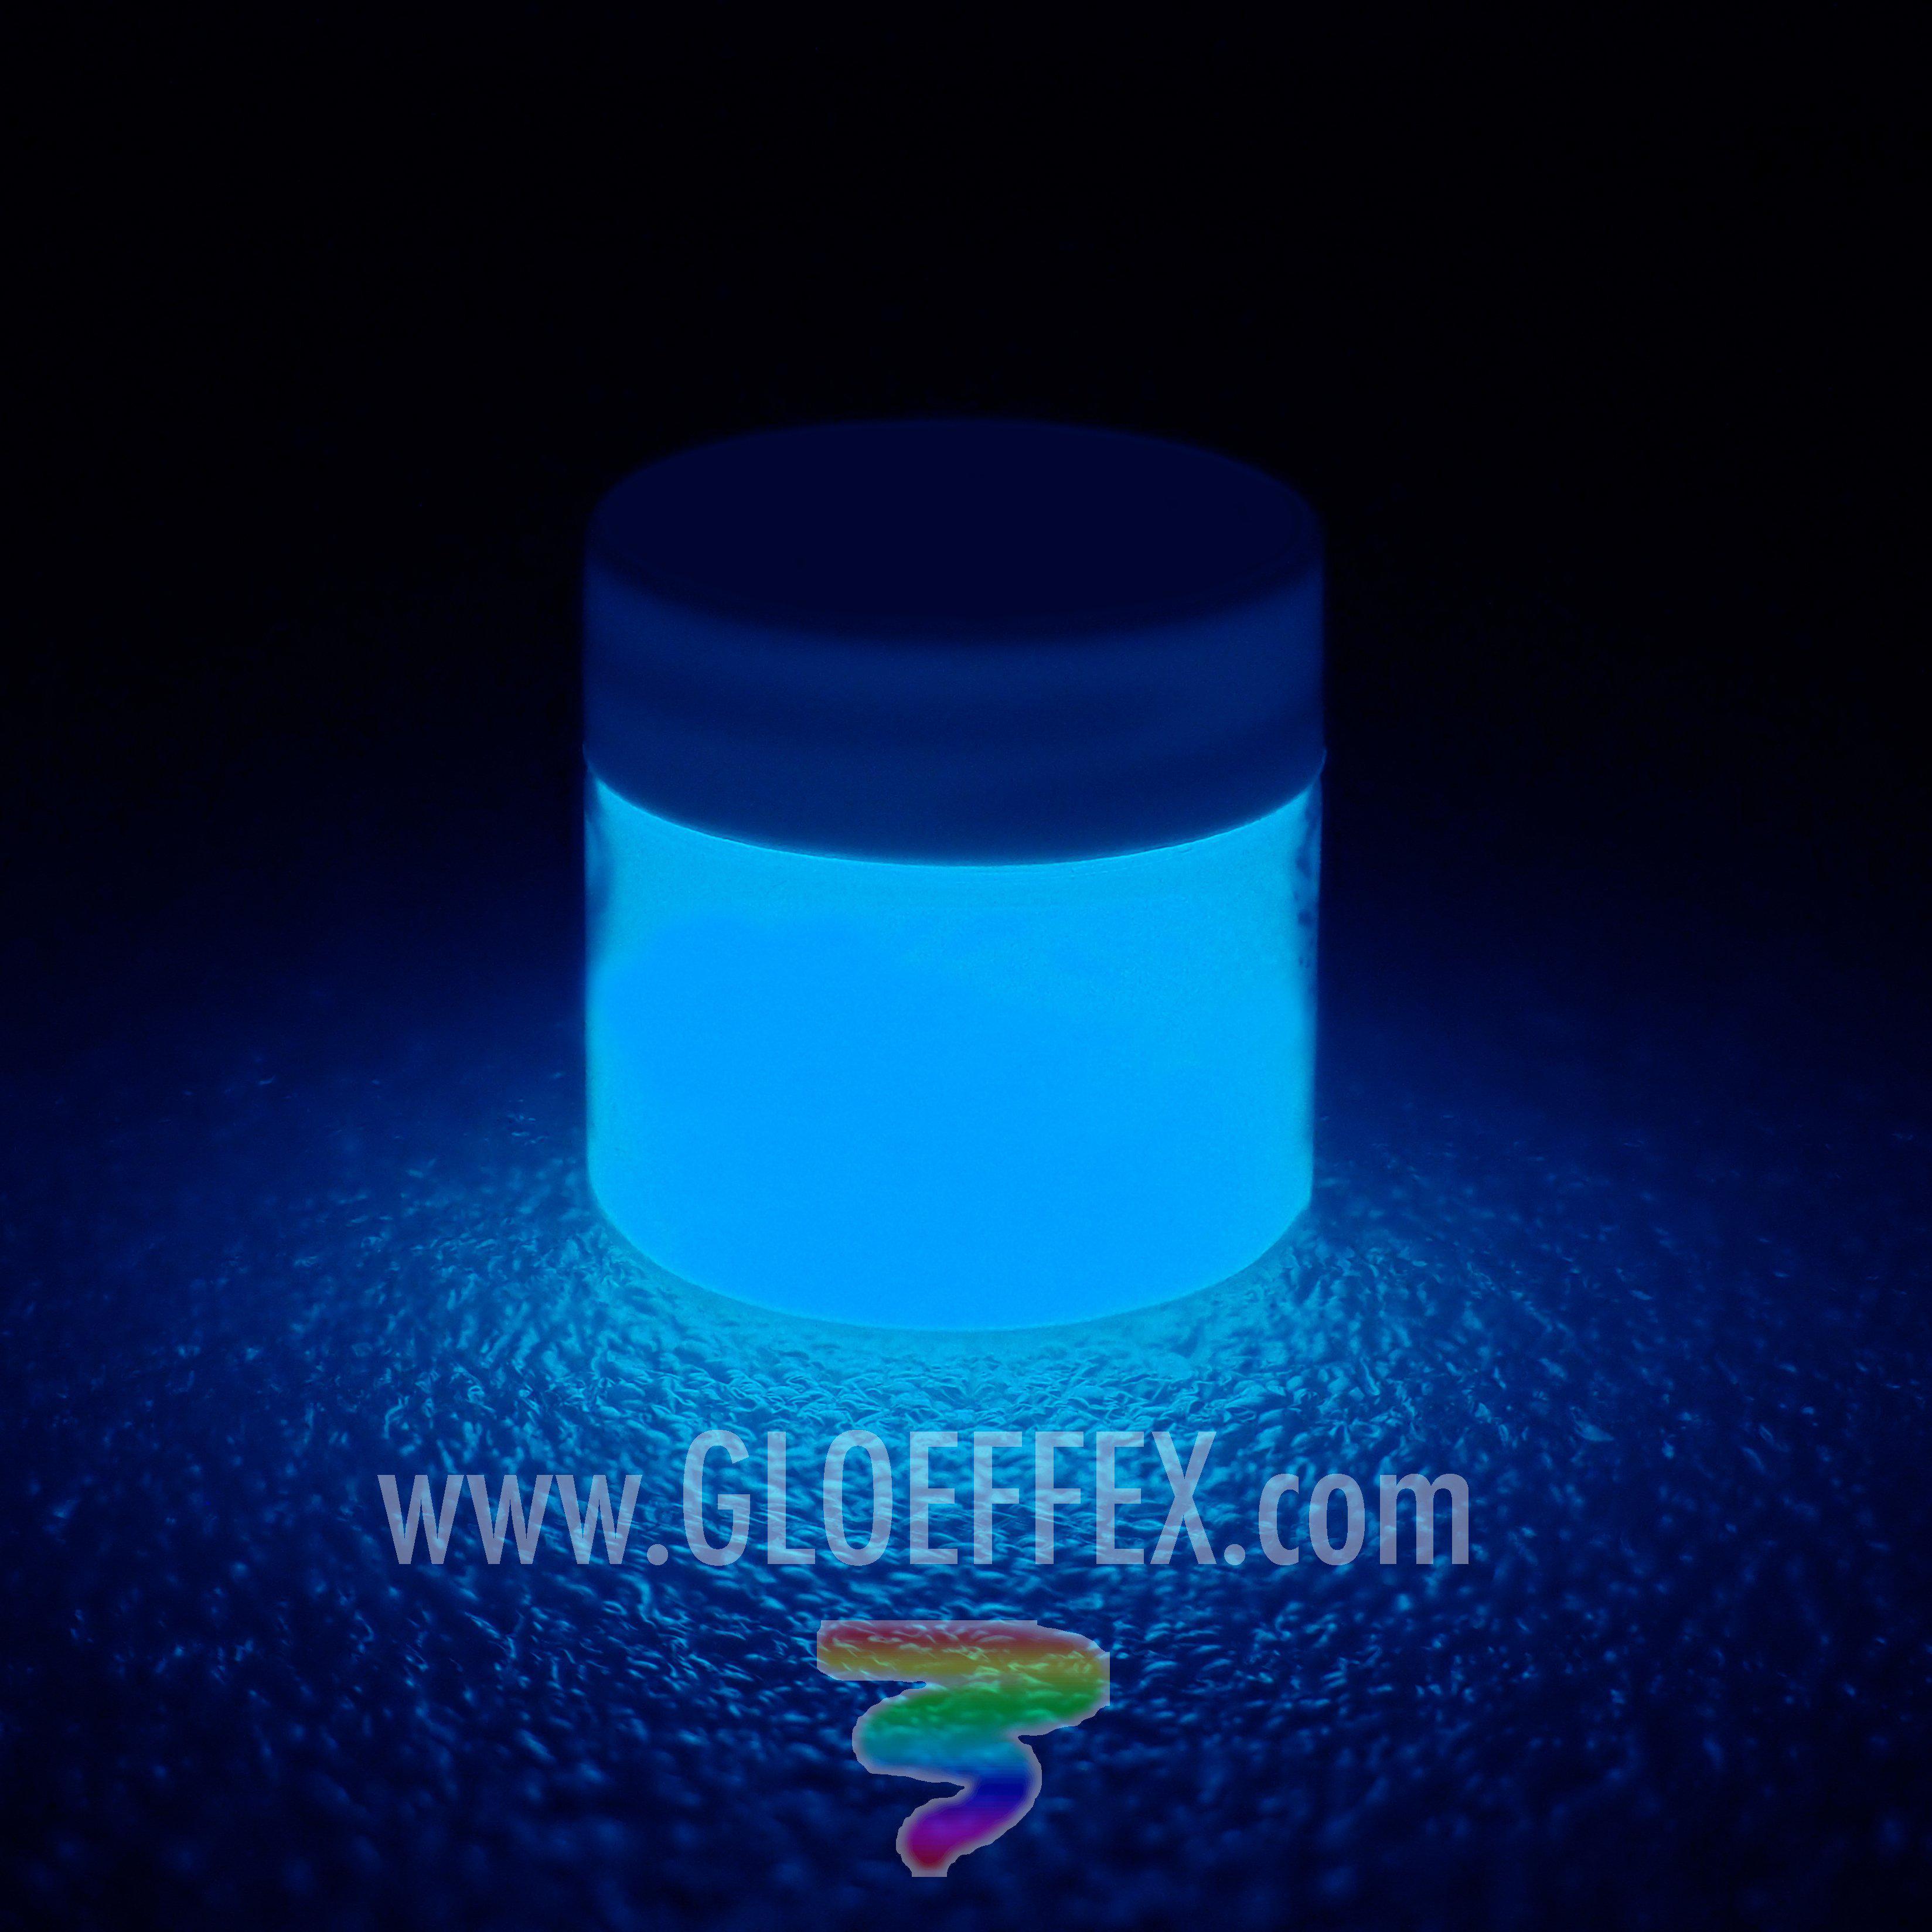 Pentart Glow in the Dark Acrylic Paint Light Blue 30 ml